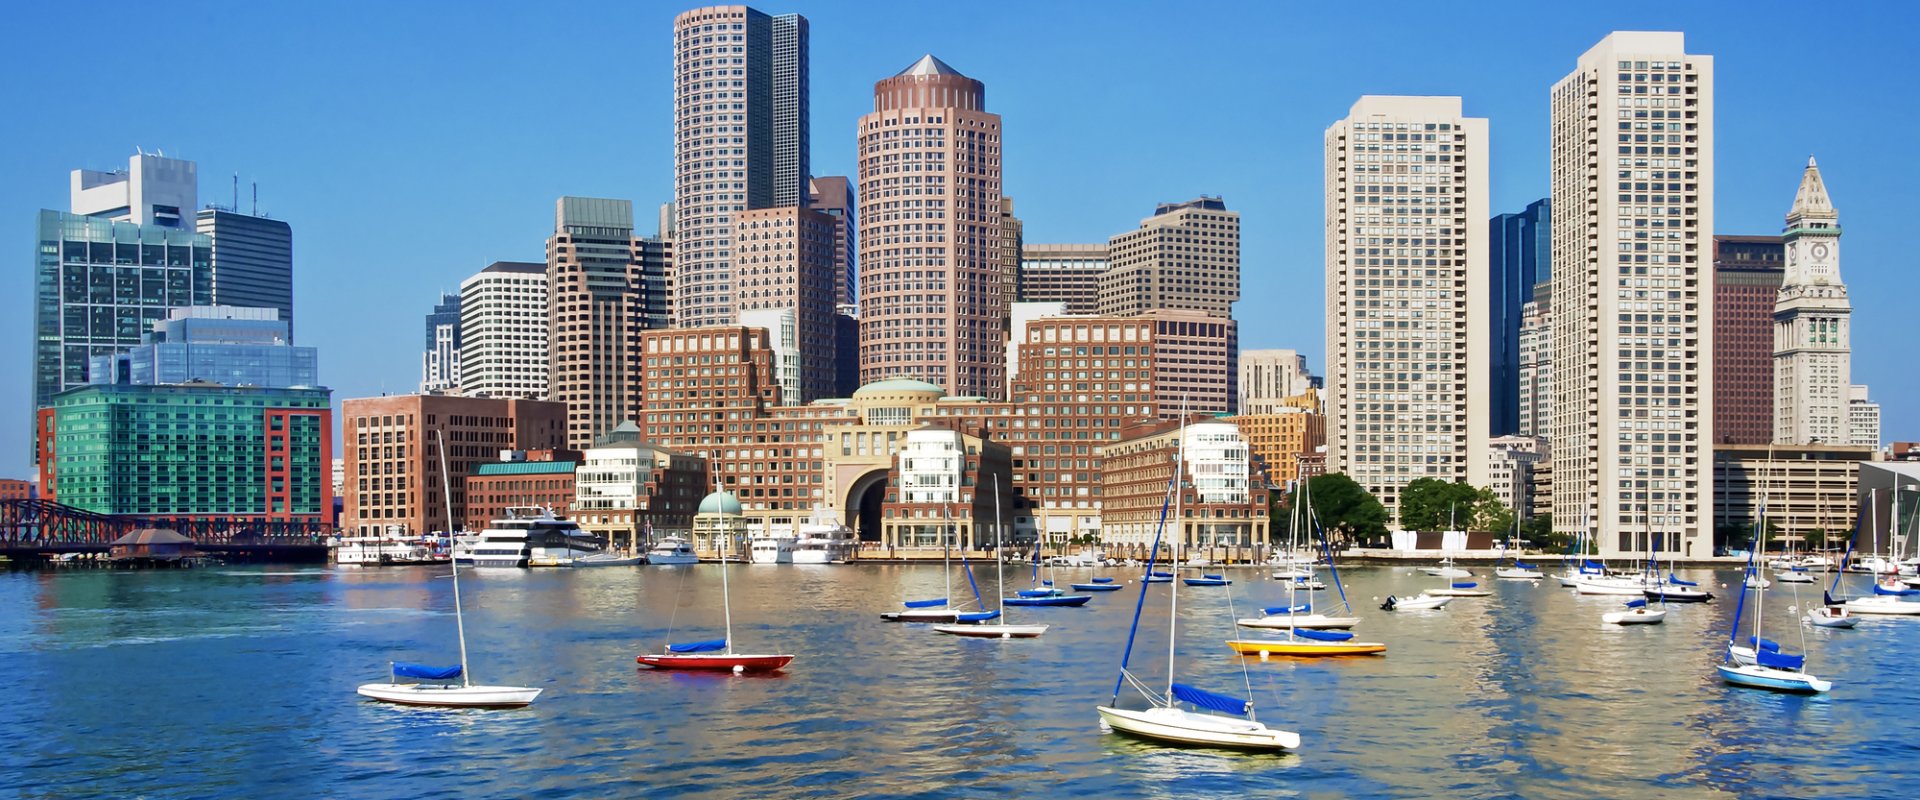 sell-your-home-fast-boston-massachusetts